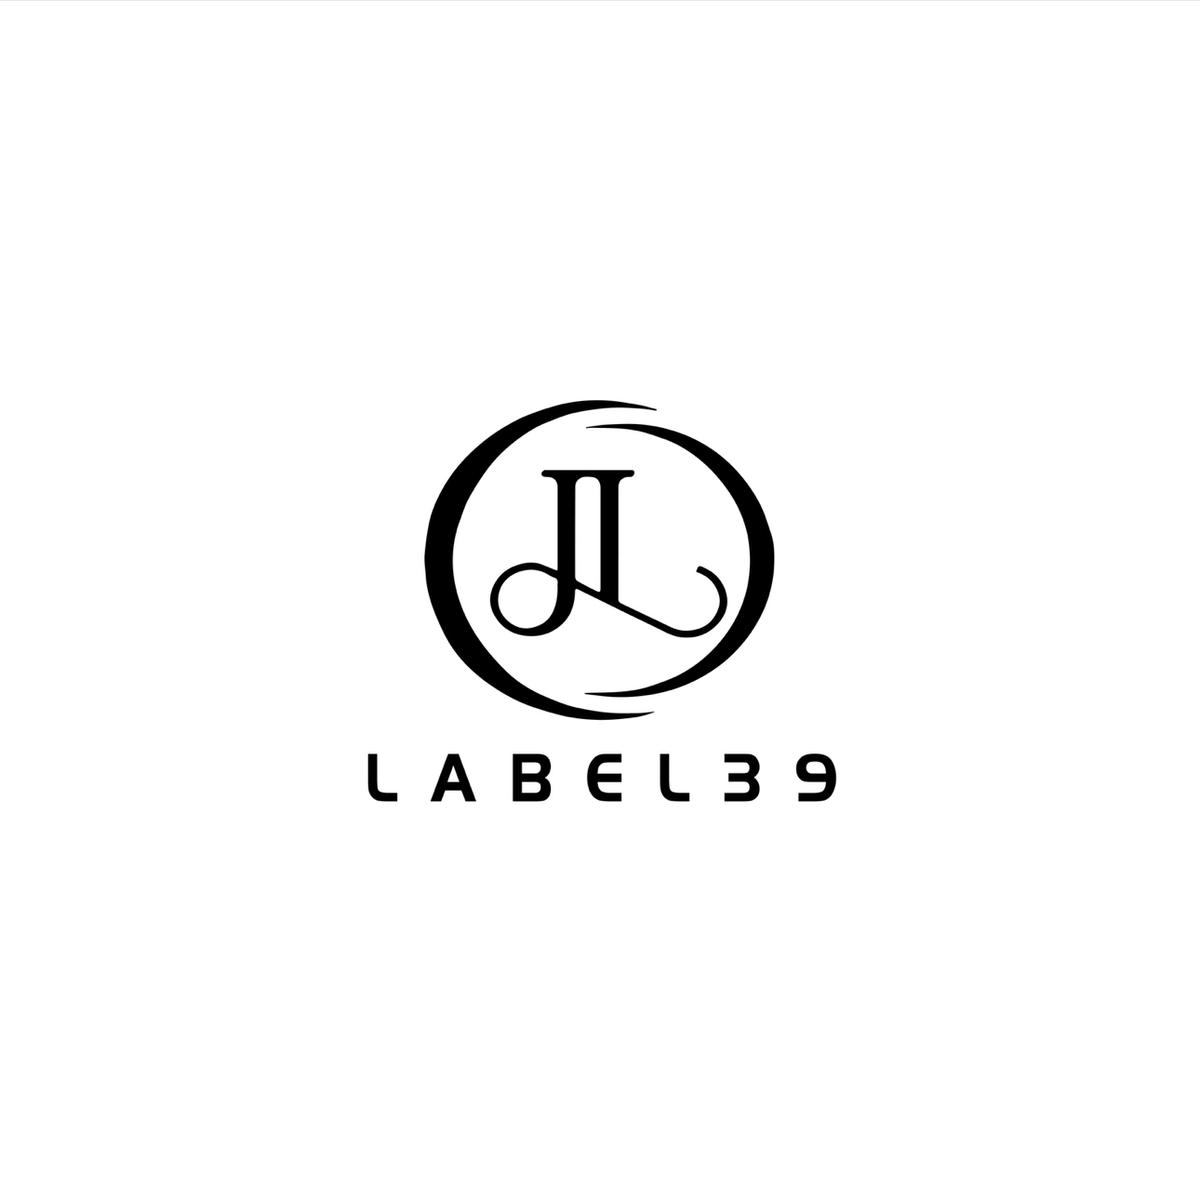 Label 39